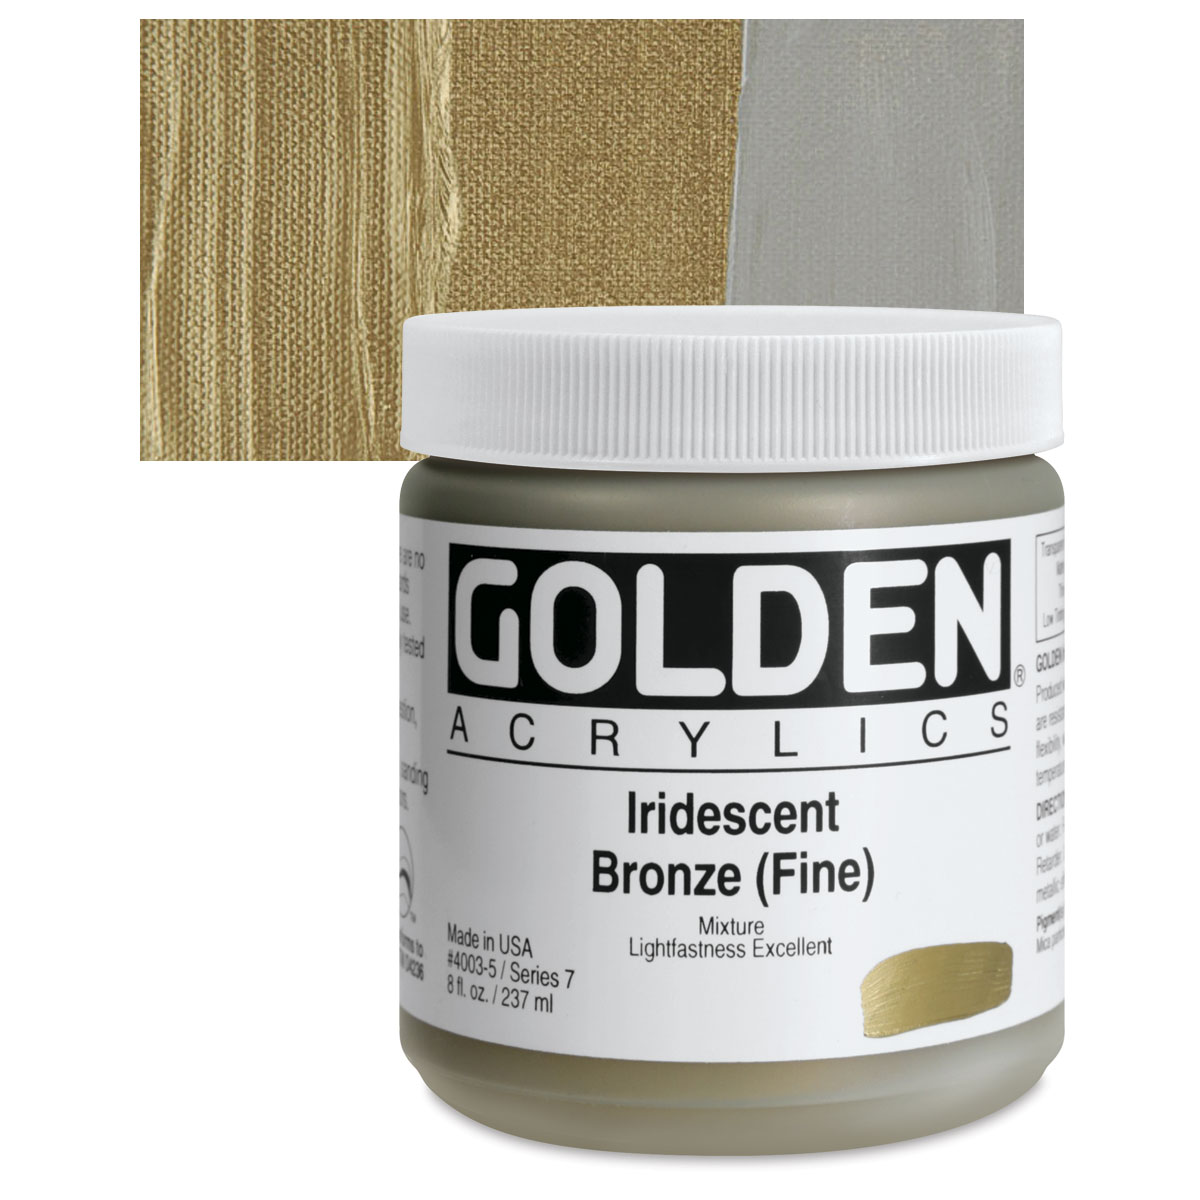 GOLDEN Open Acrylic Paints Iridescent Bronze (Fine) 2 oz